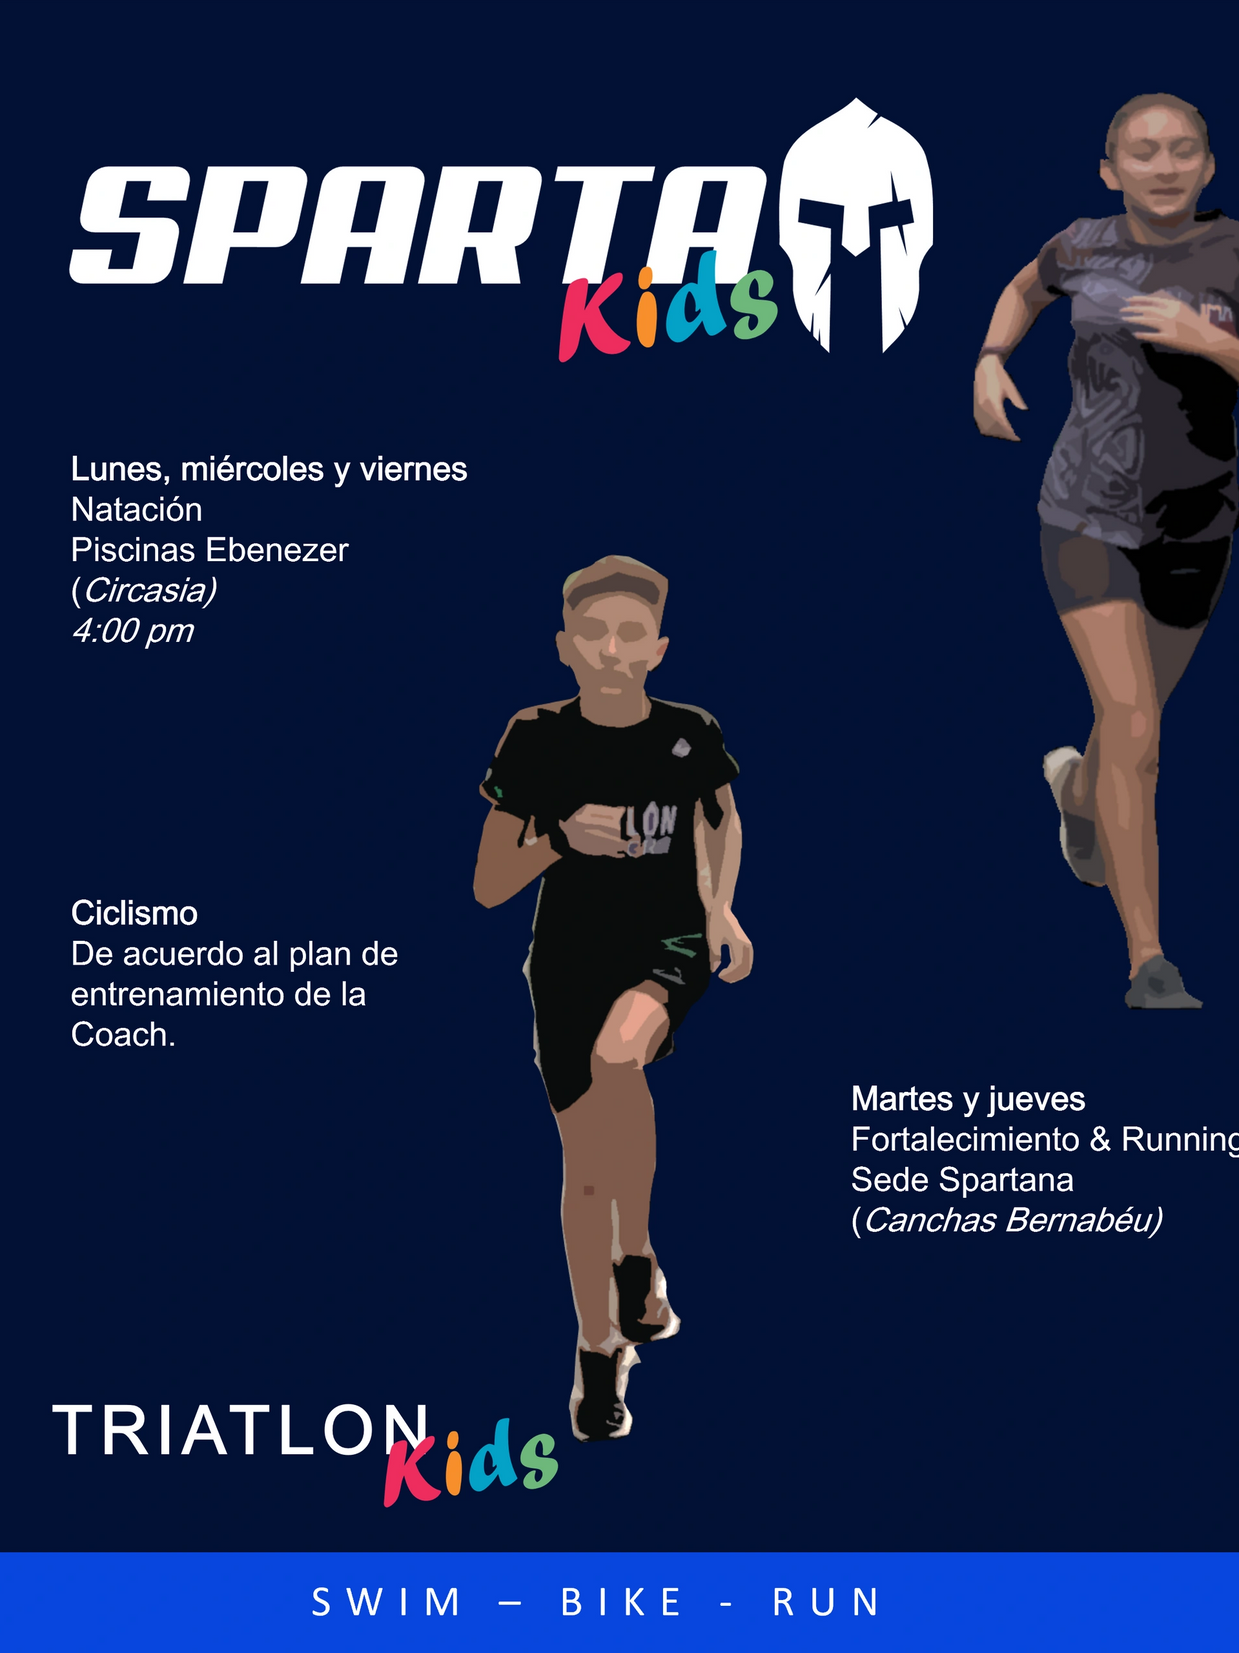 Banner promocional Sparta kids para chicos